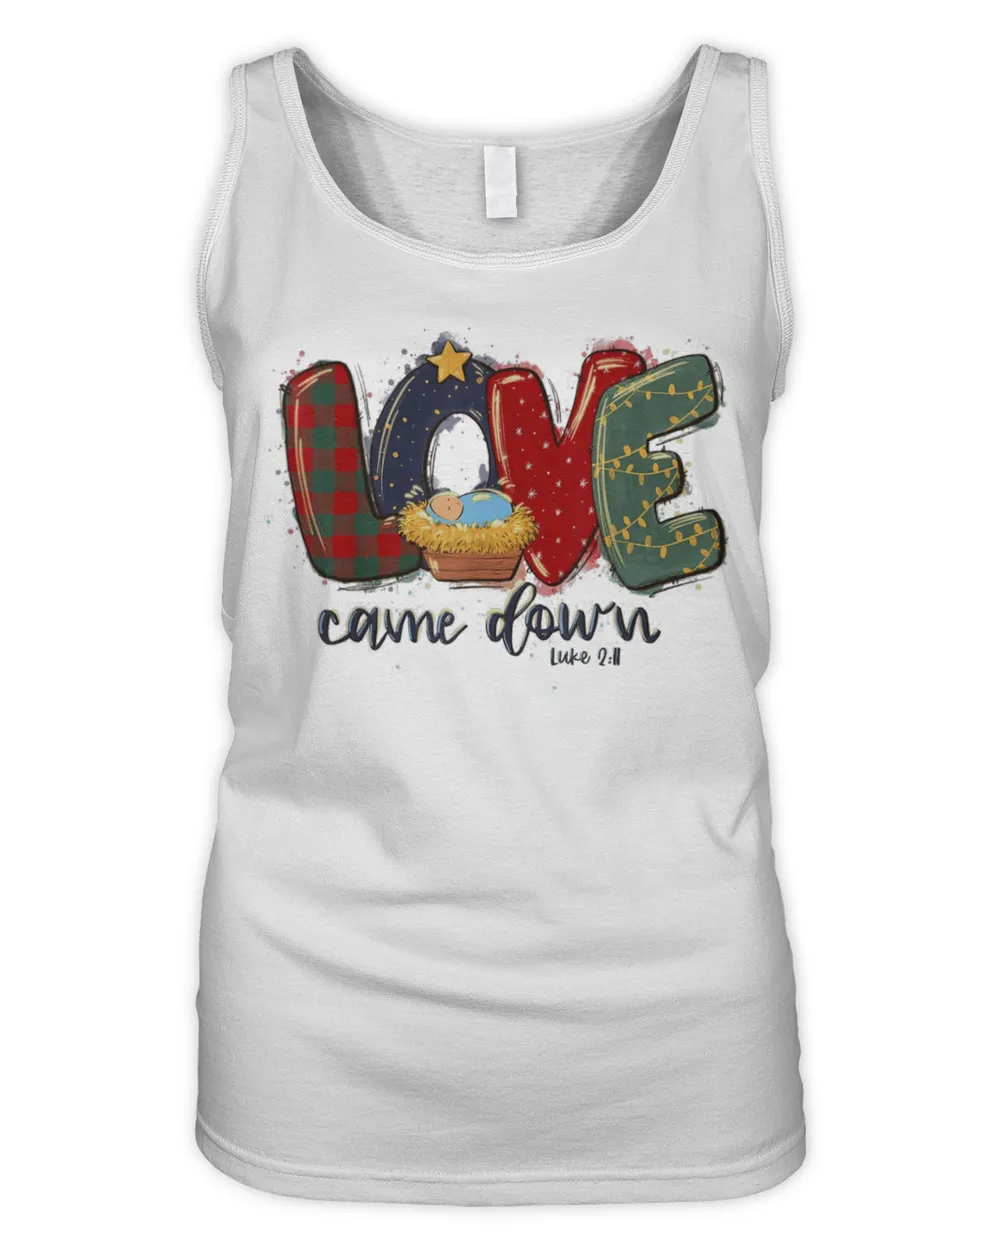 Love Came Down Luke 2.11 Baby Jesus Christmas Christian T-Shirt